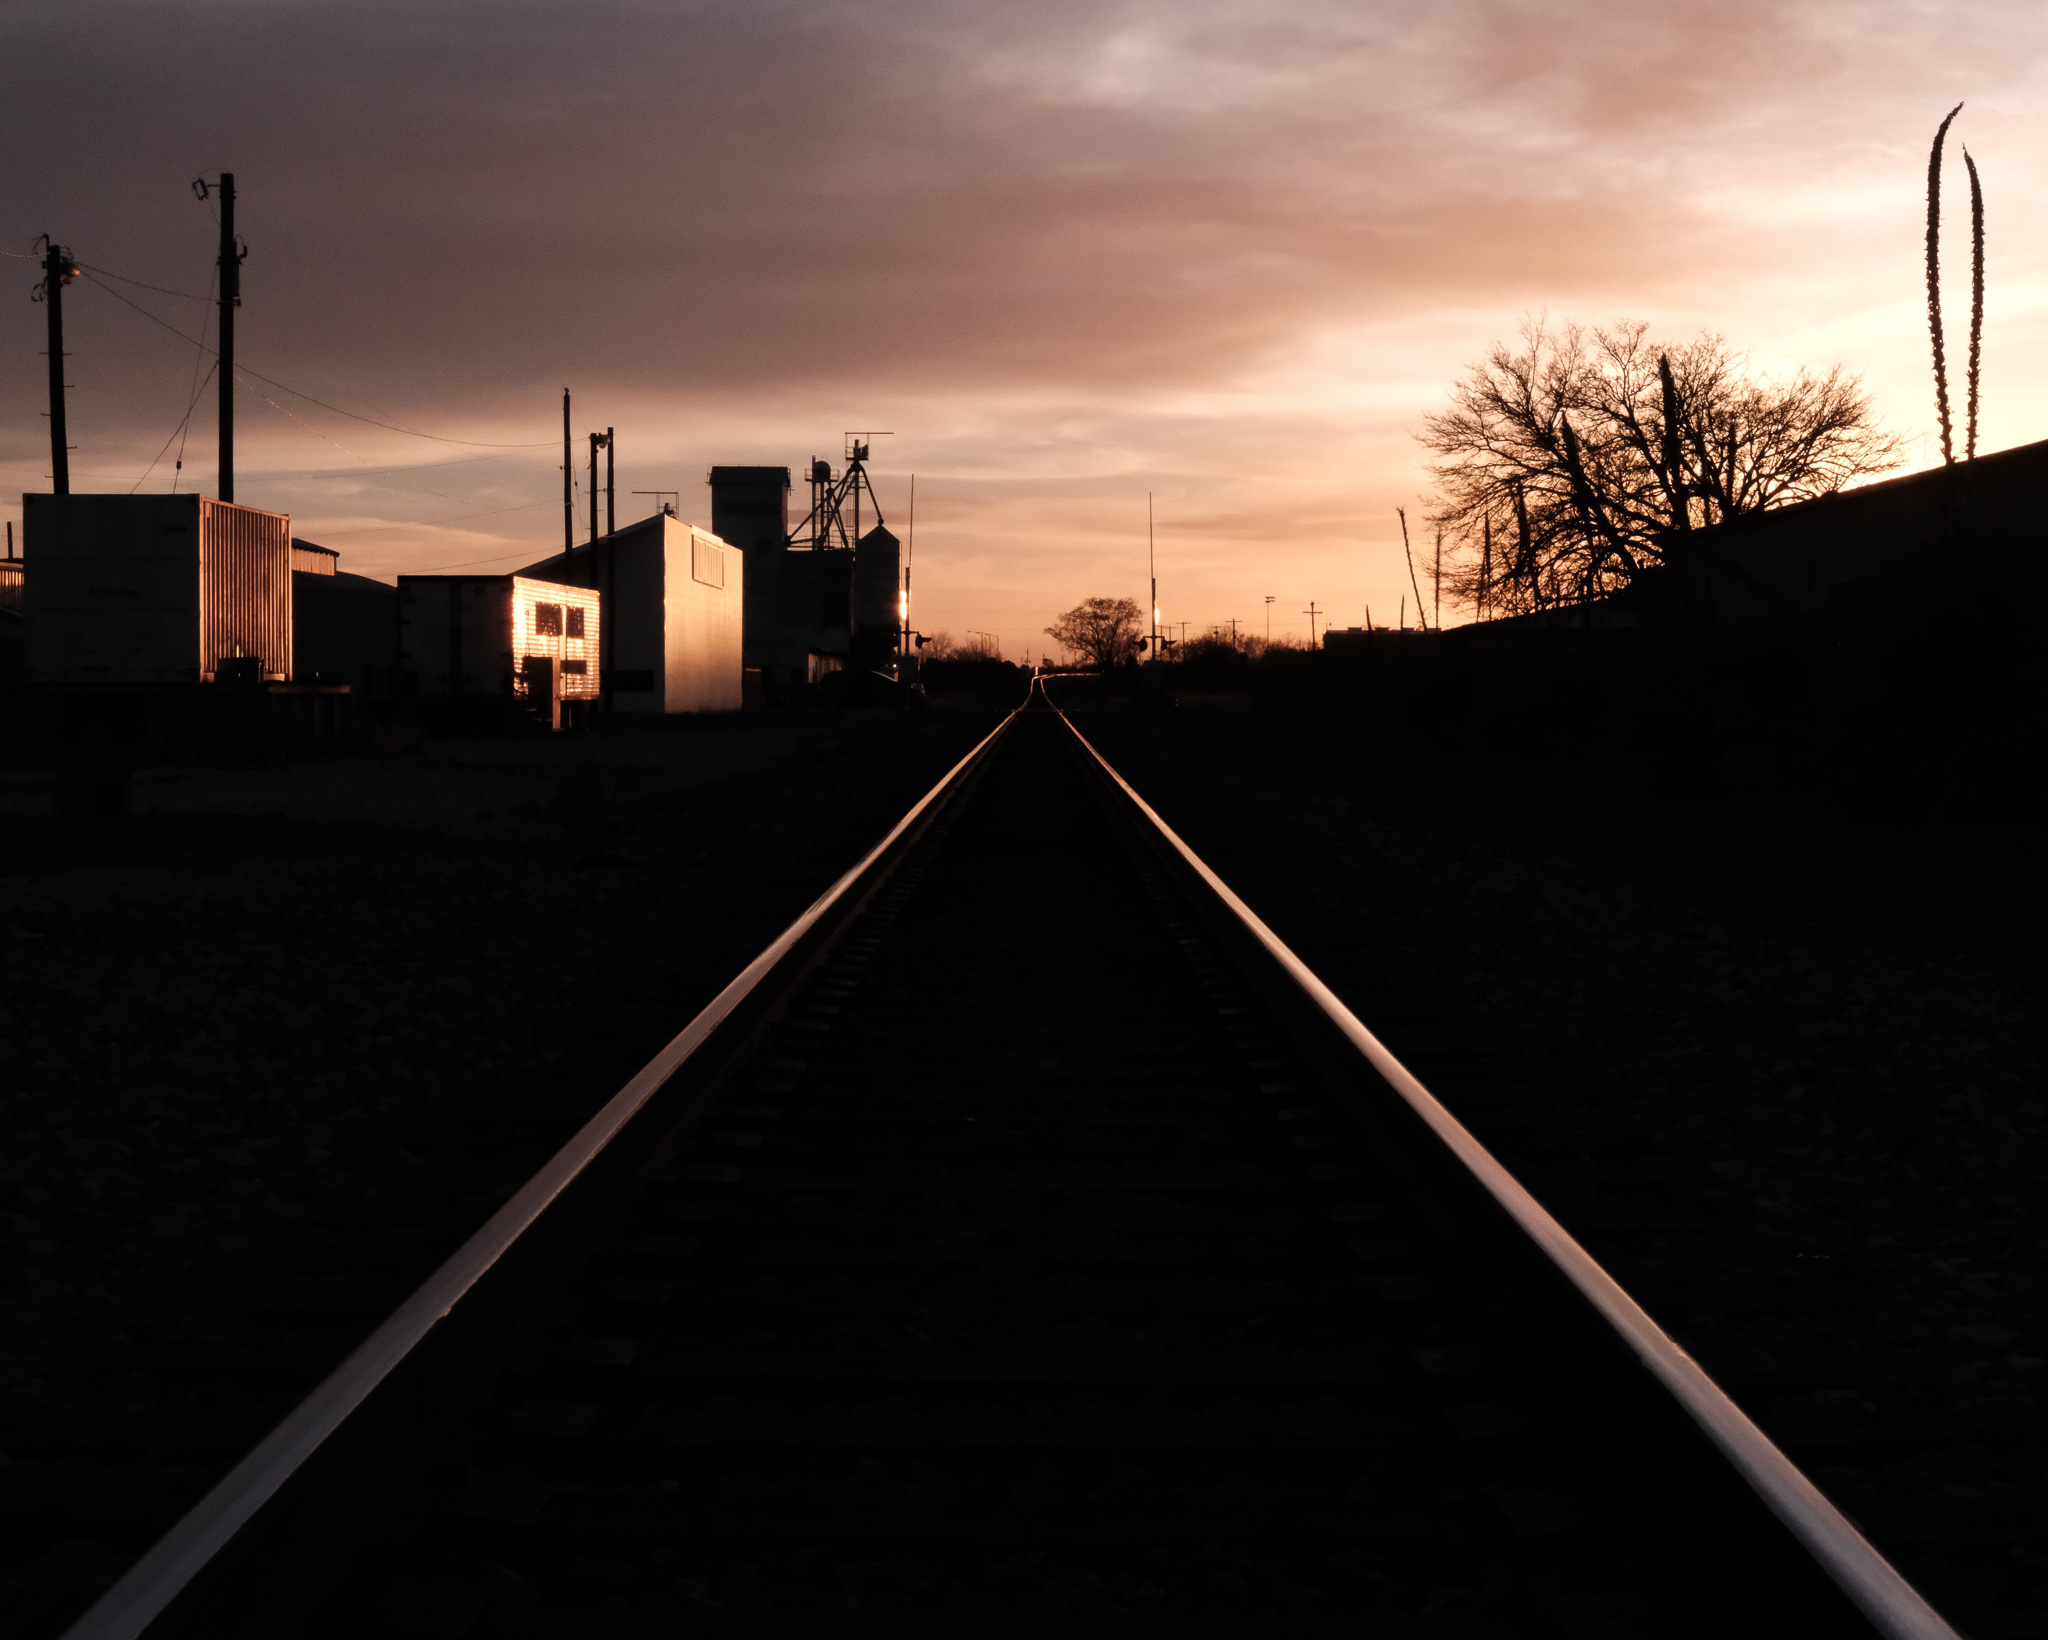 A night sky and a train track